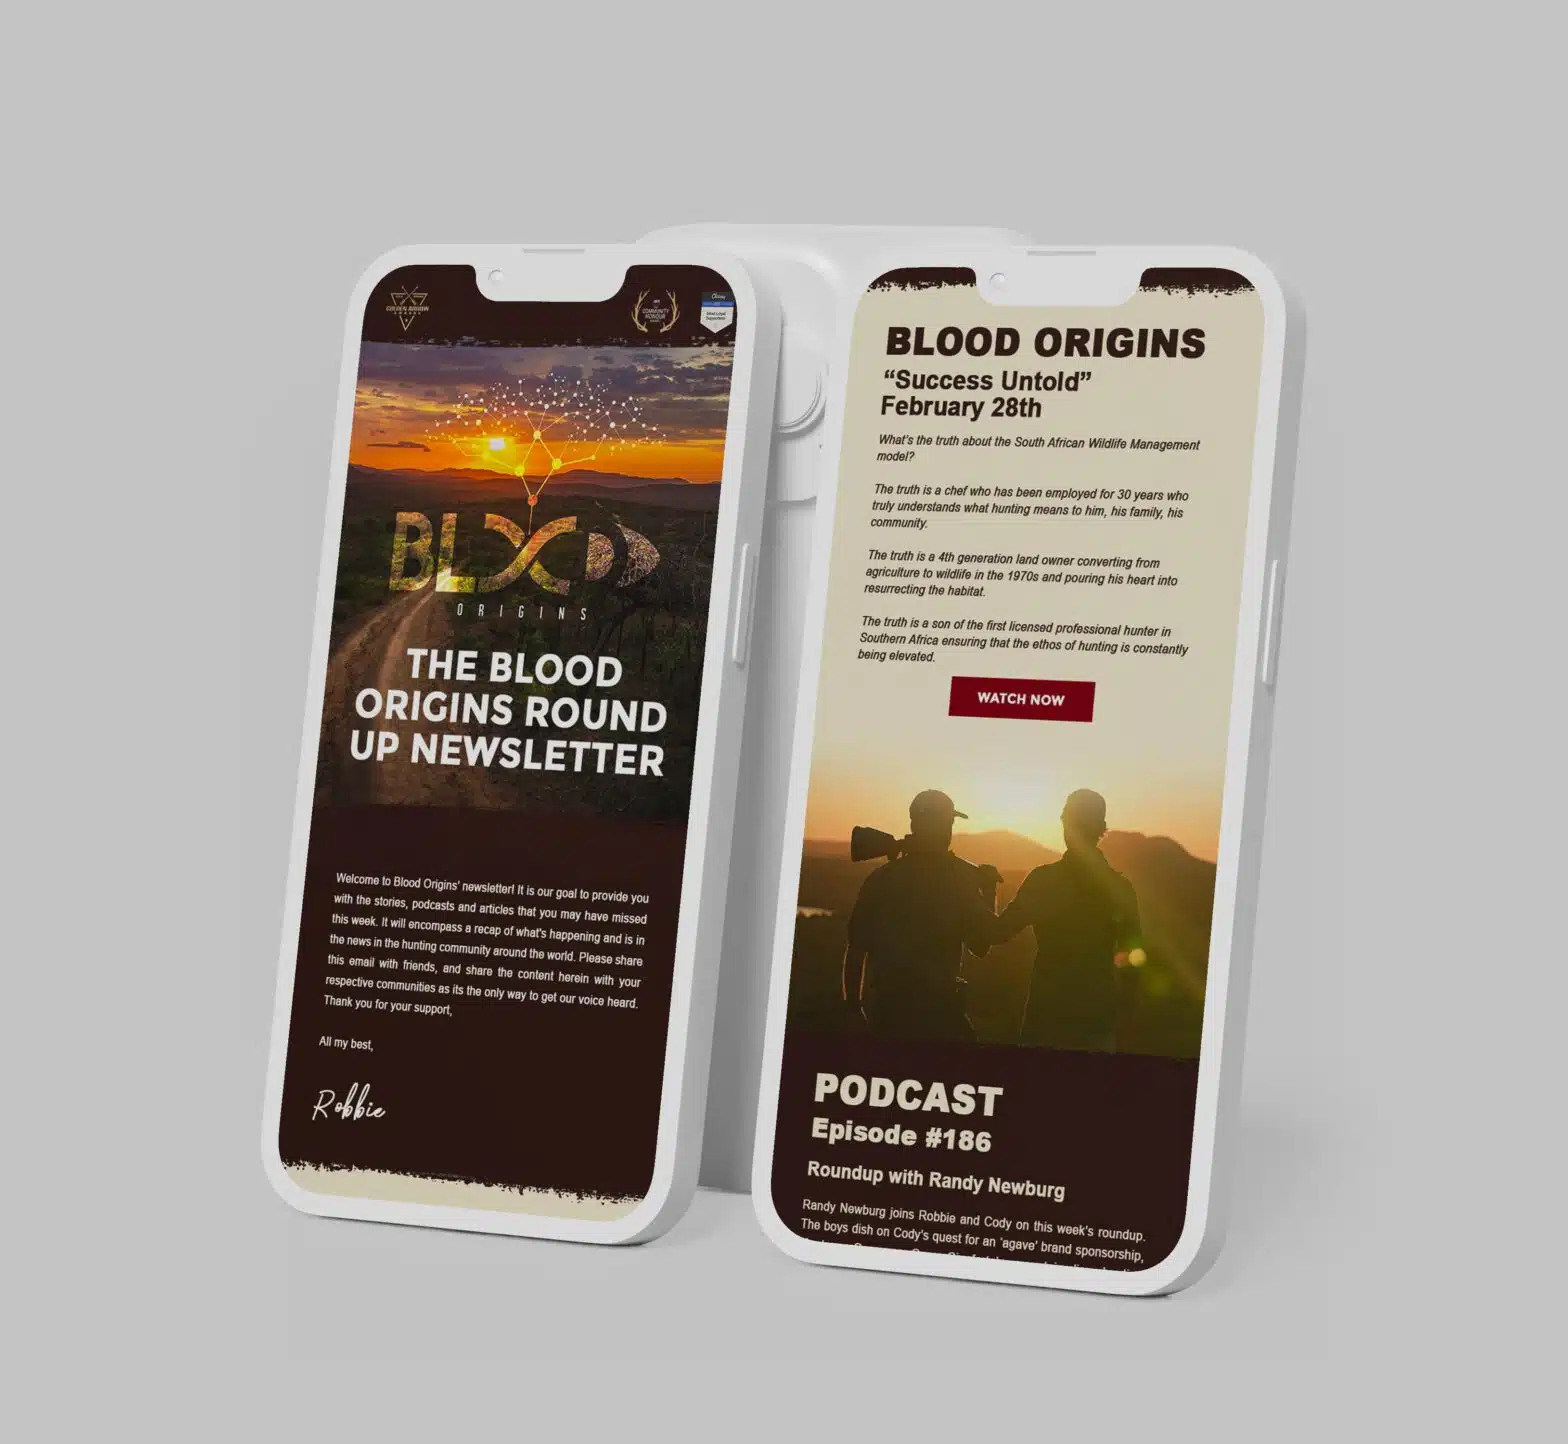 blood origins web design on mobile devices